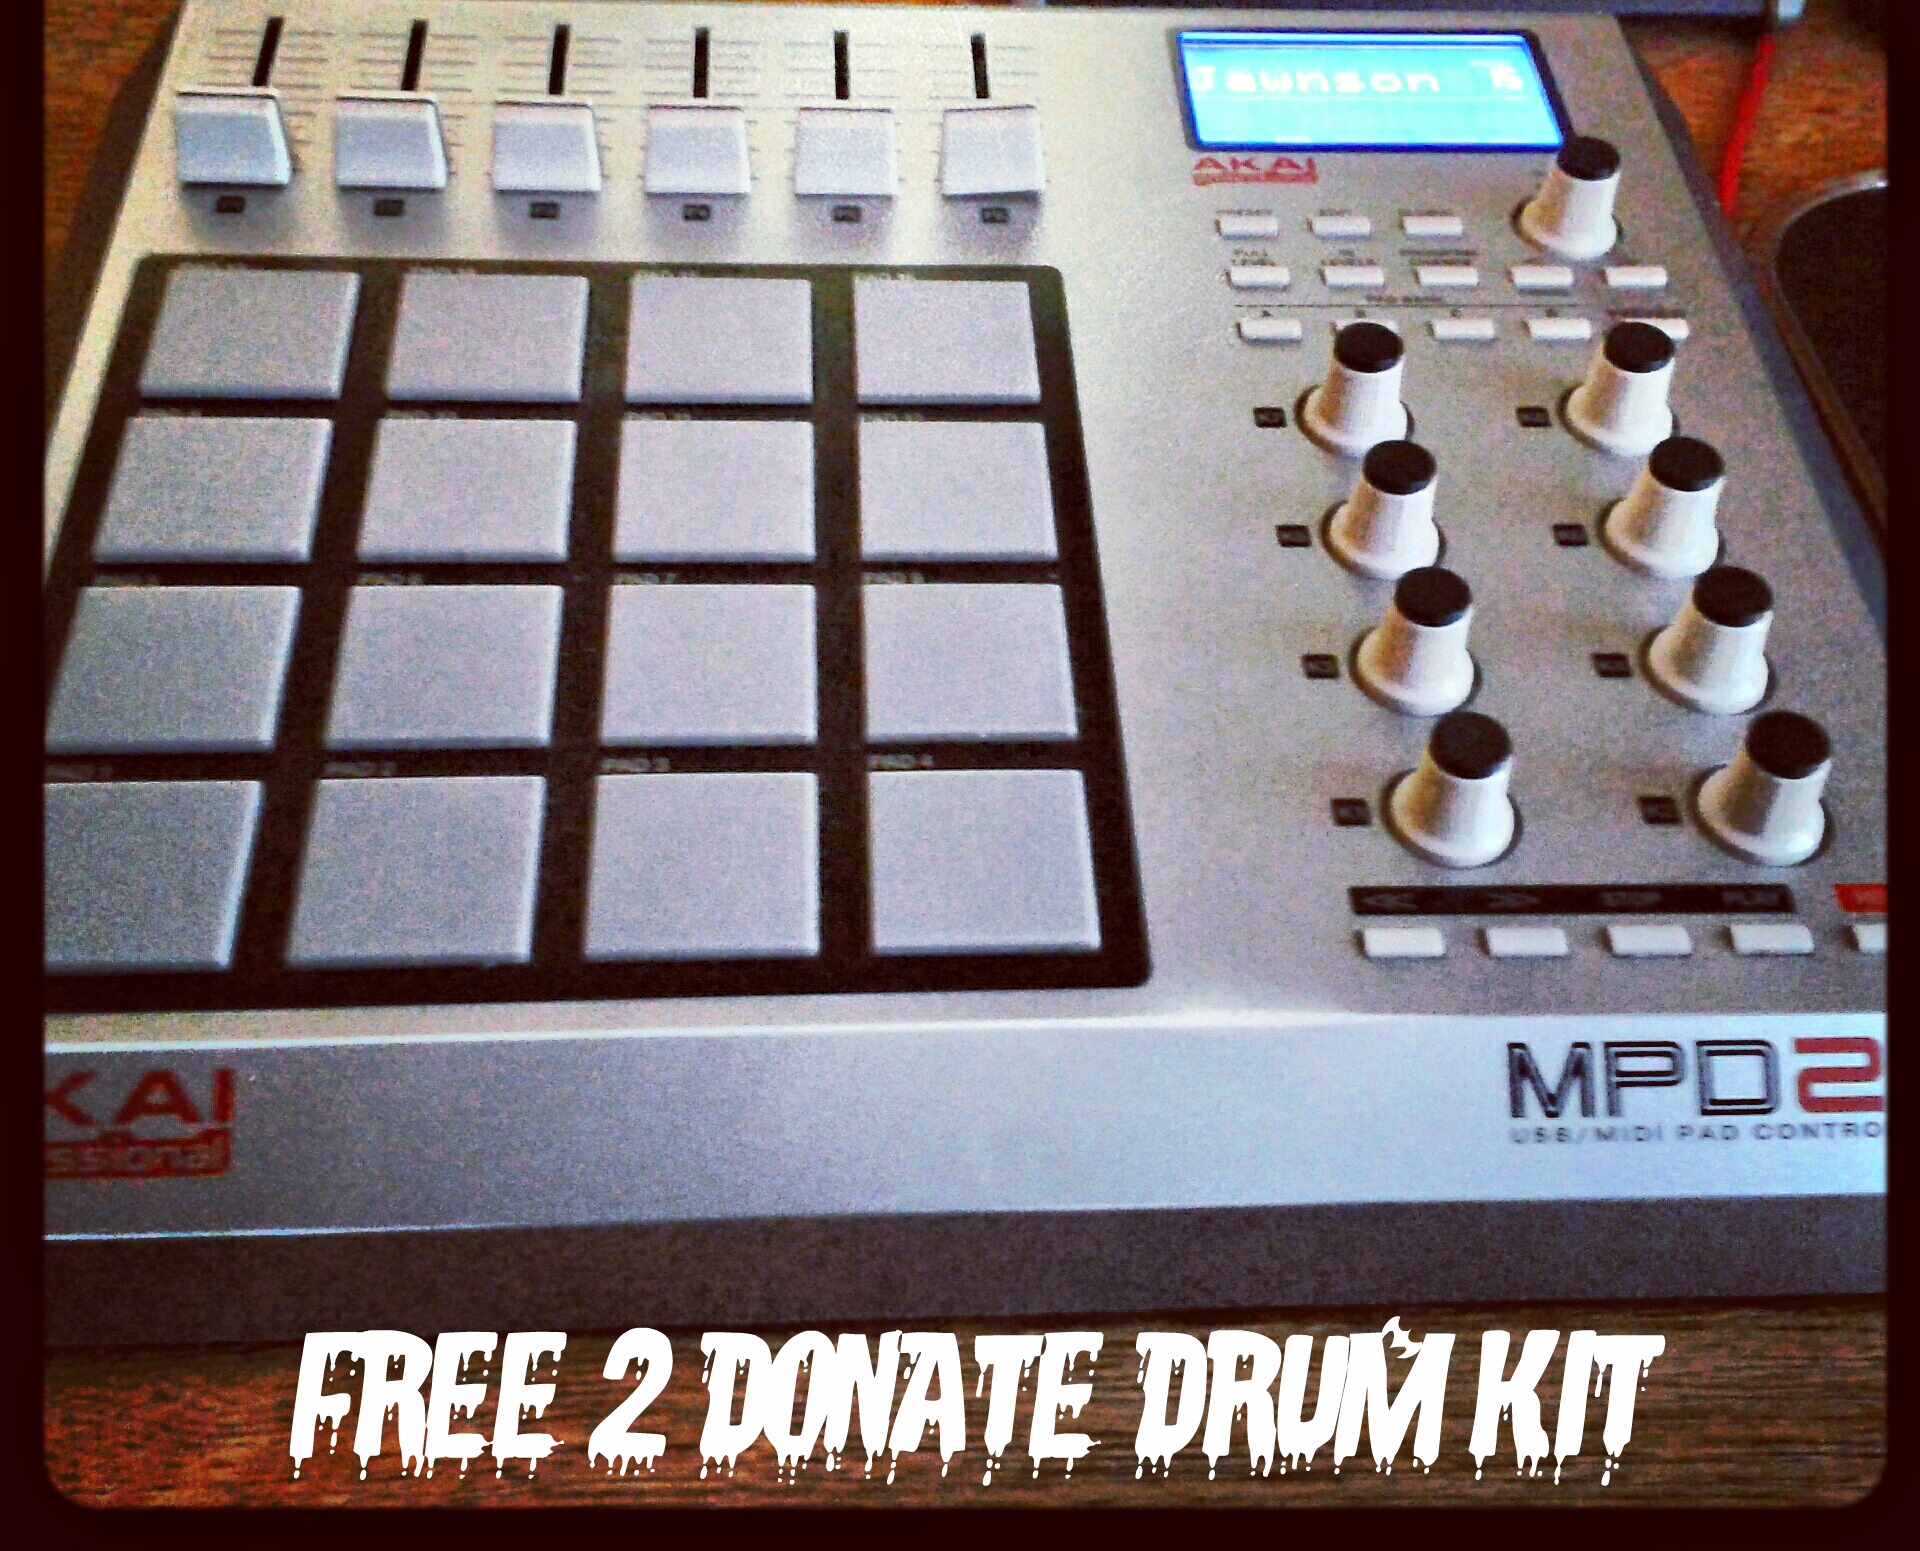 ultrabeat drum kits free download